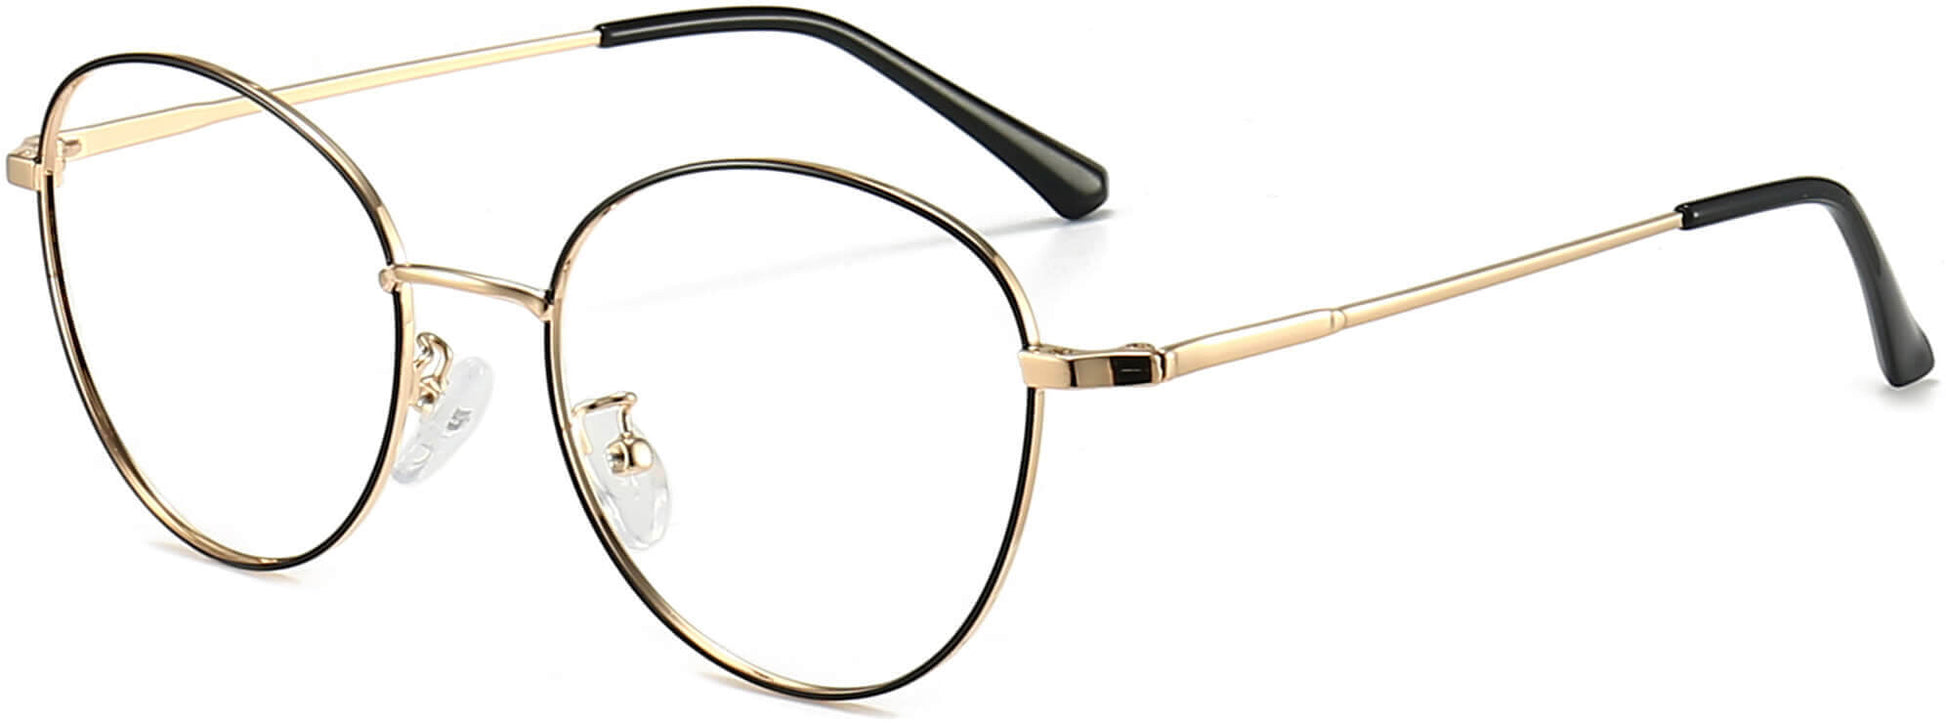 Lorelai Round Black Eyeglasses from ANRRI, angle view